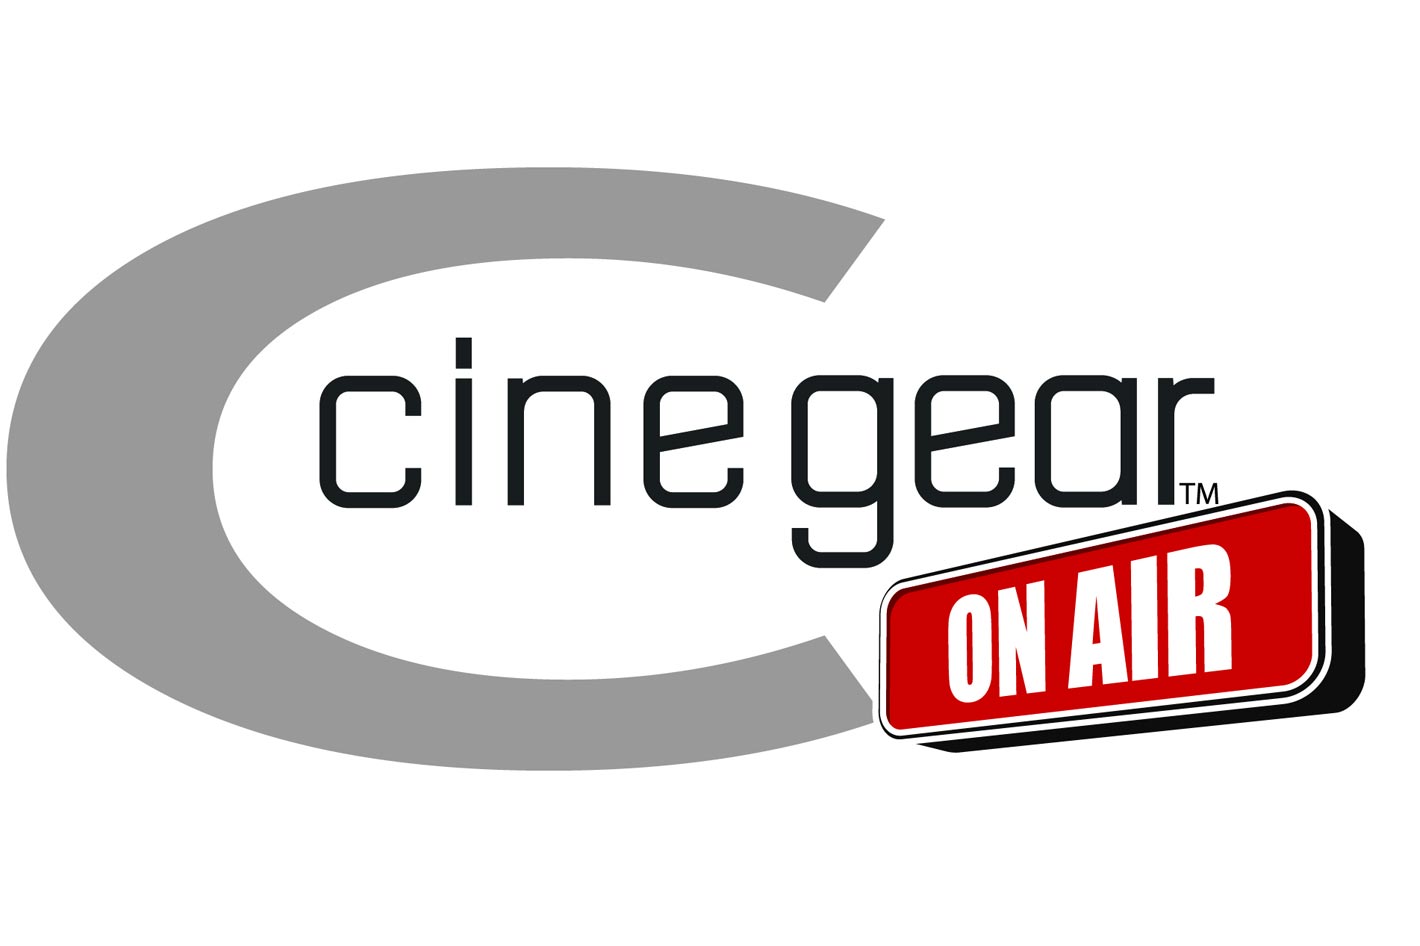 CineGear ON AIR will kick off July 1